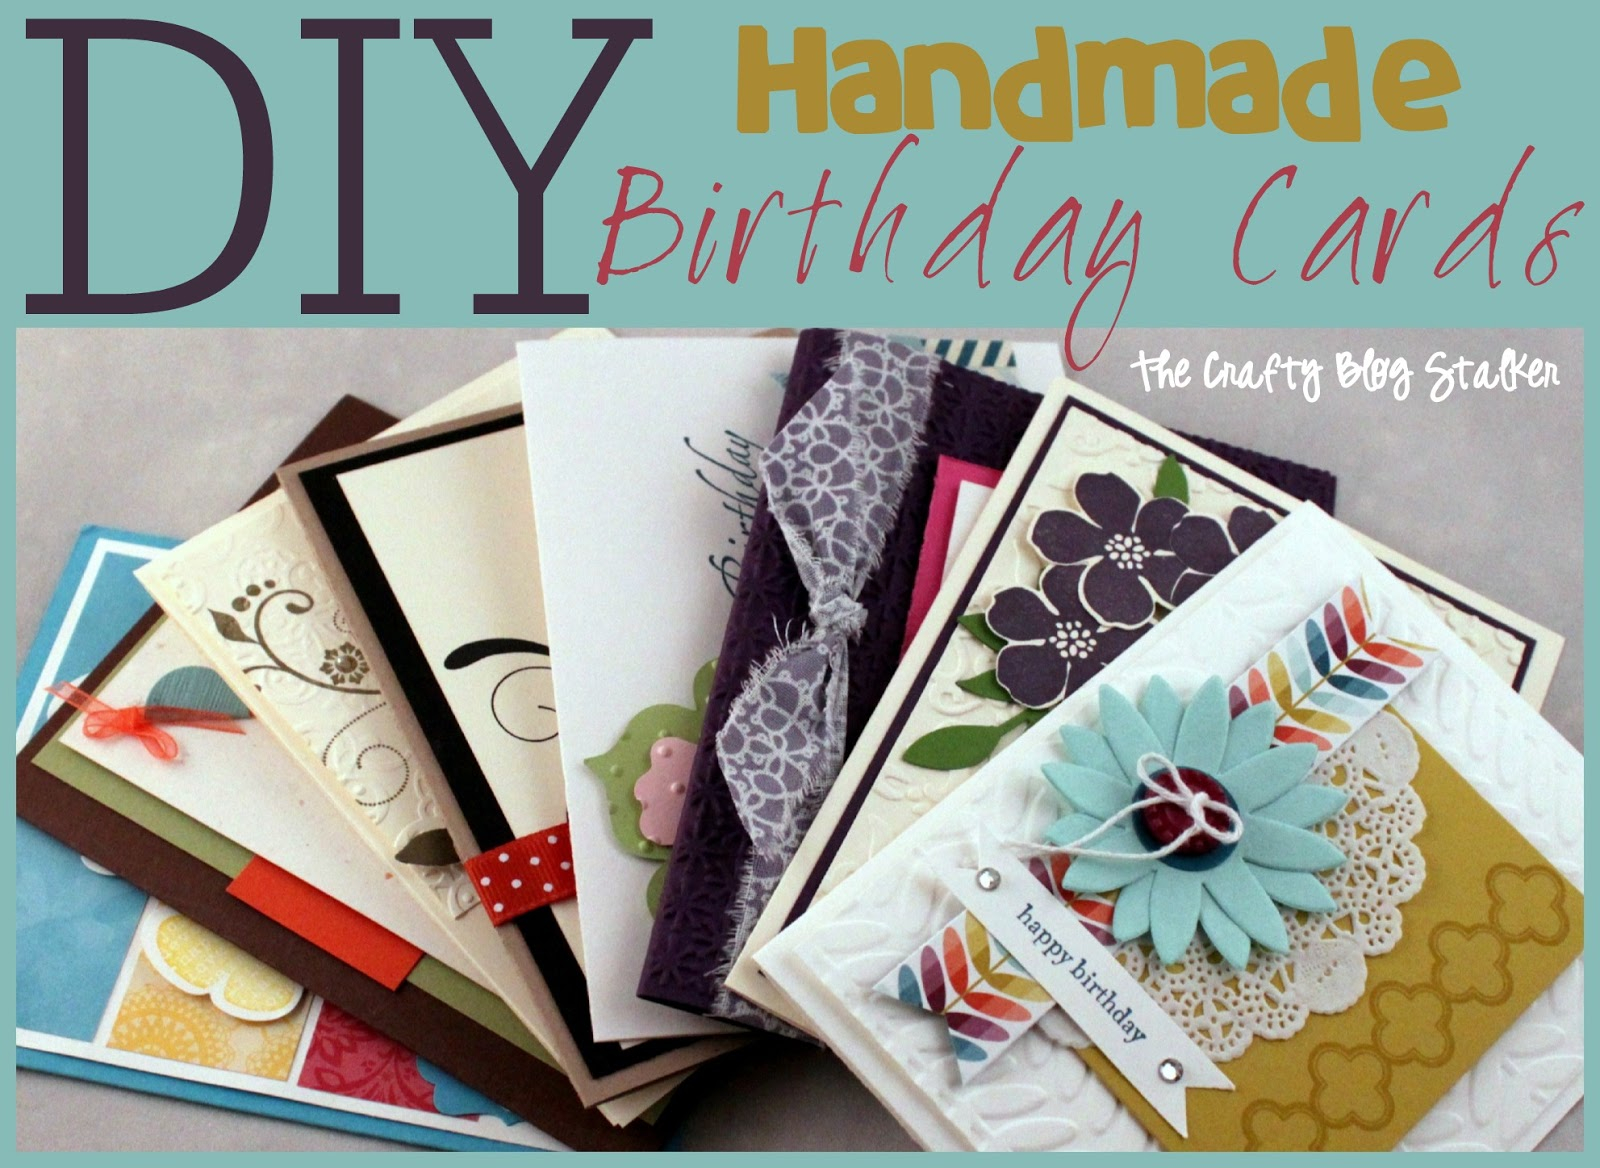 Cute Ideas For Birthday Cards Handmade Birthday Card Ideas The Crafty Blog Stalker